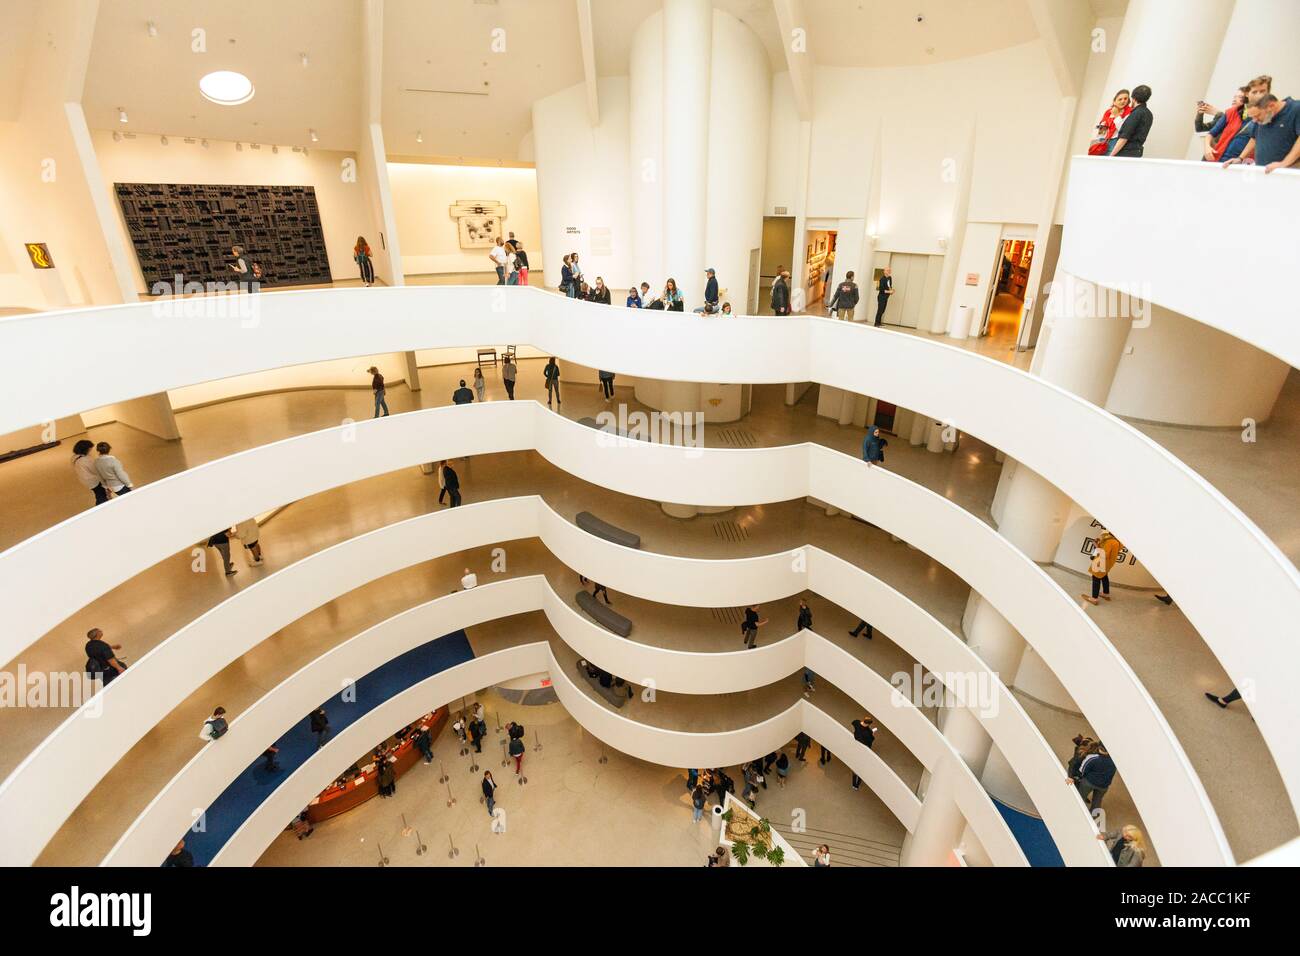 The Spiral Rotunda atrium inside the Guggenheim Museum, Fifth Avenue, Manhattan, New York City, United States of America. Stock Photo